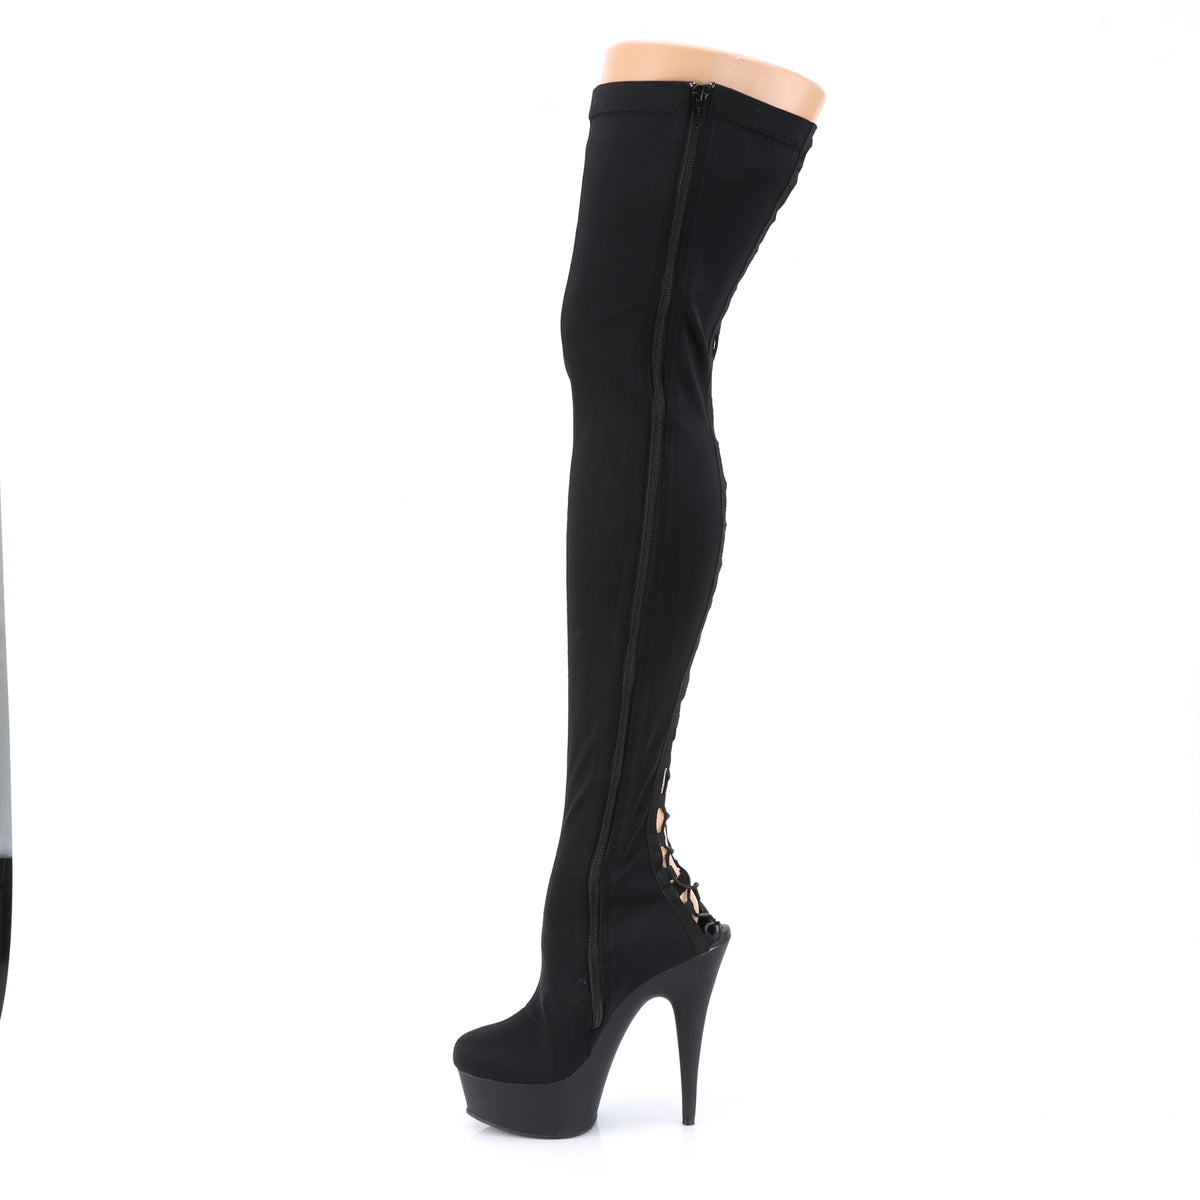 DELIGHT-3003 6" Heel Black Lycra Pole Dancing Platforms-Pleaser- Sexy Shoes Pole Dance Heels